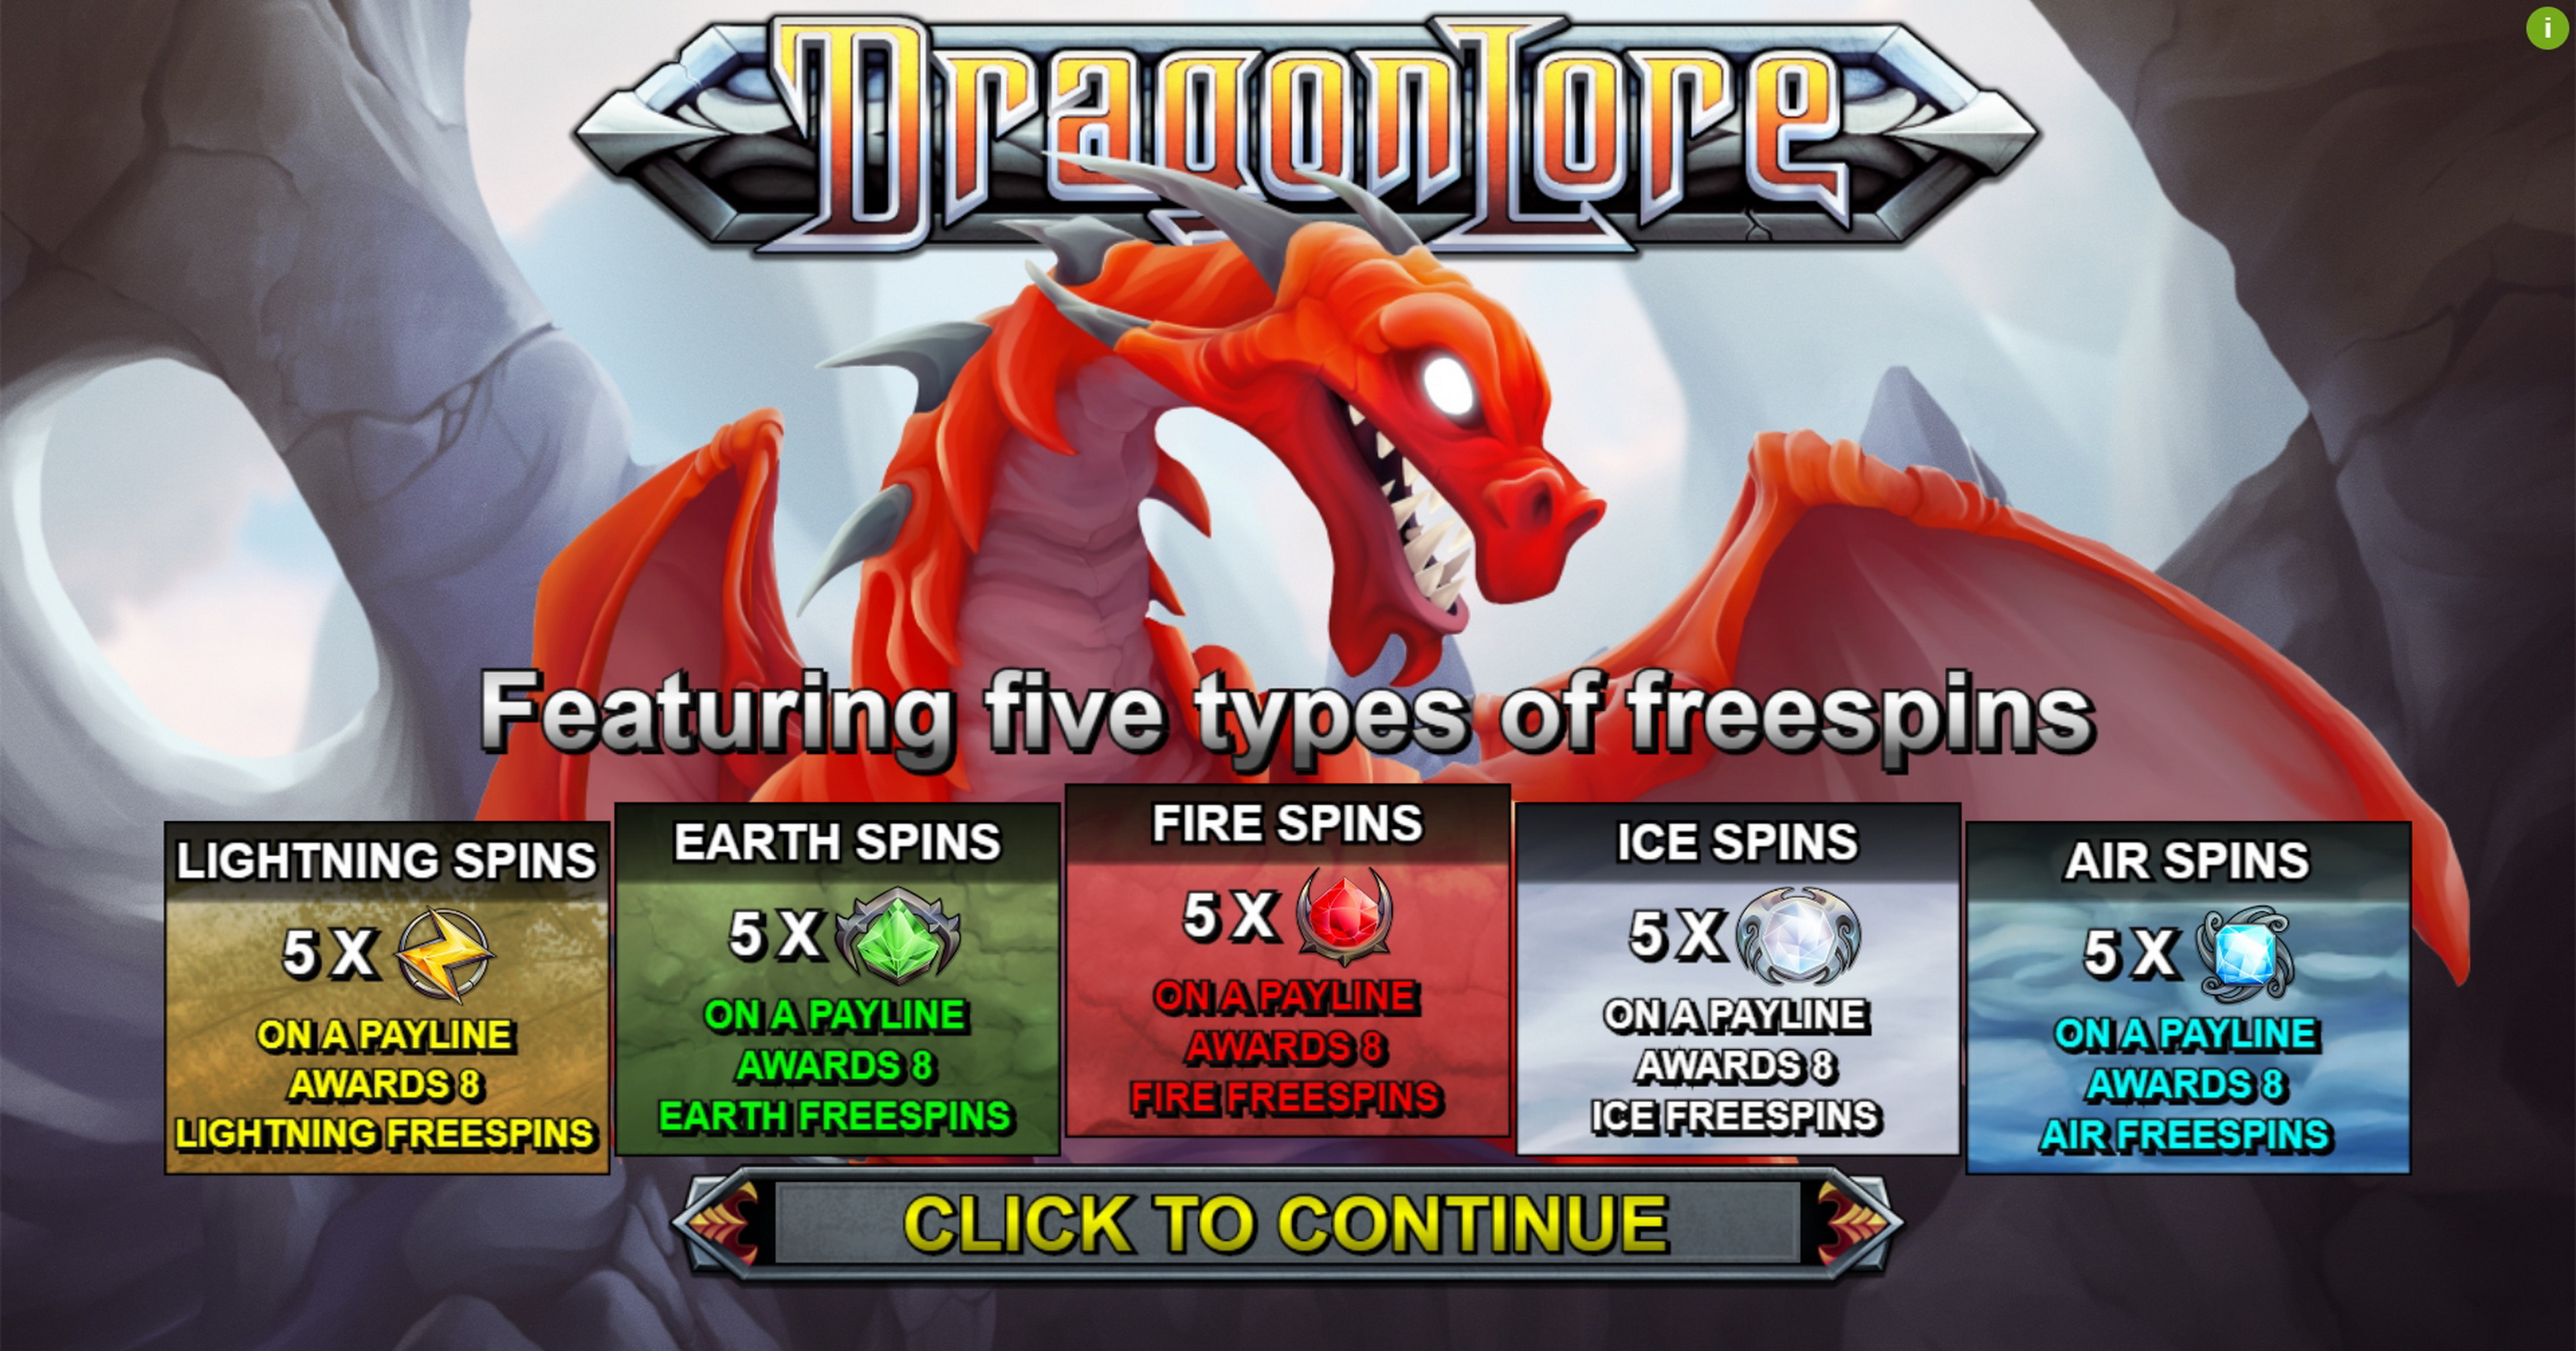 Play Dragon Lore Free Casino Slot Game by Bulletproof Games